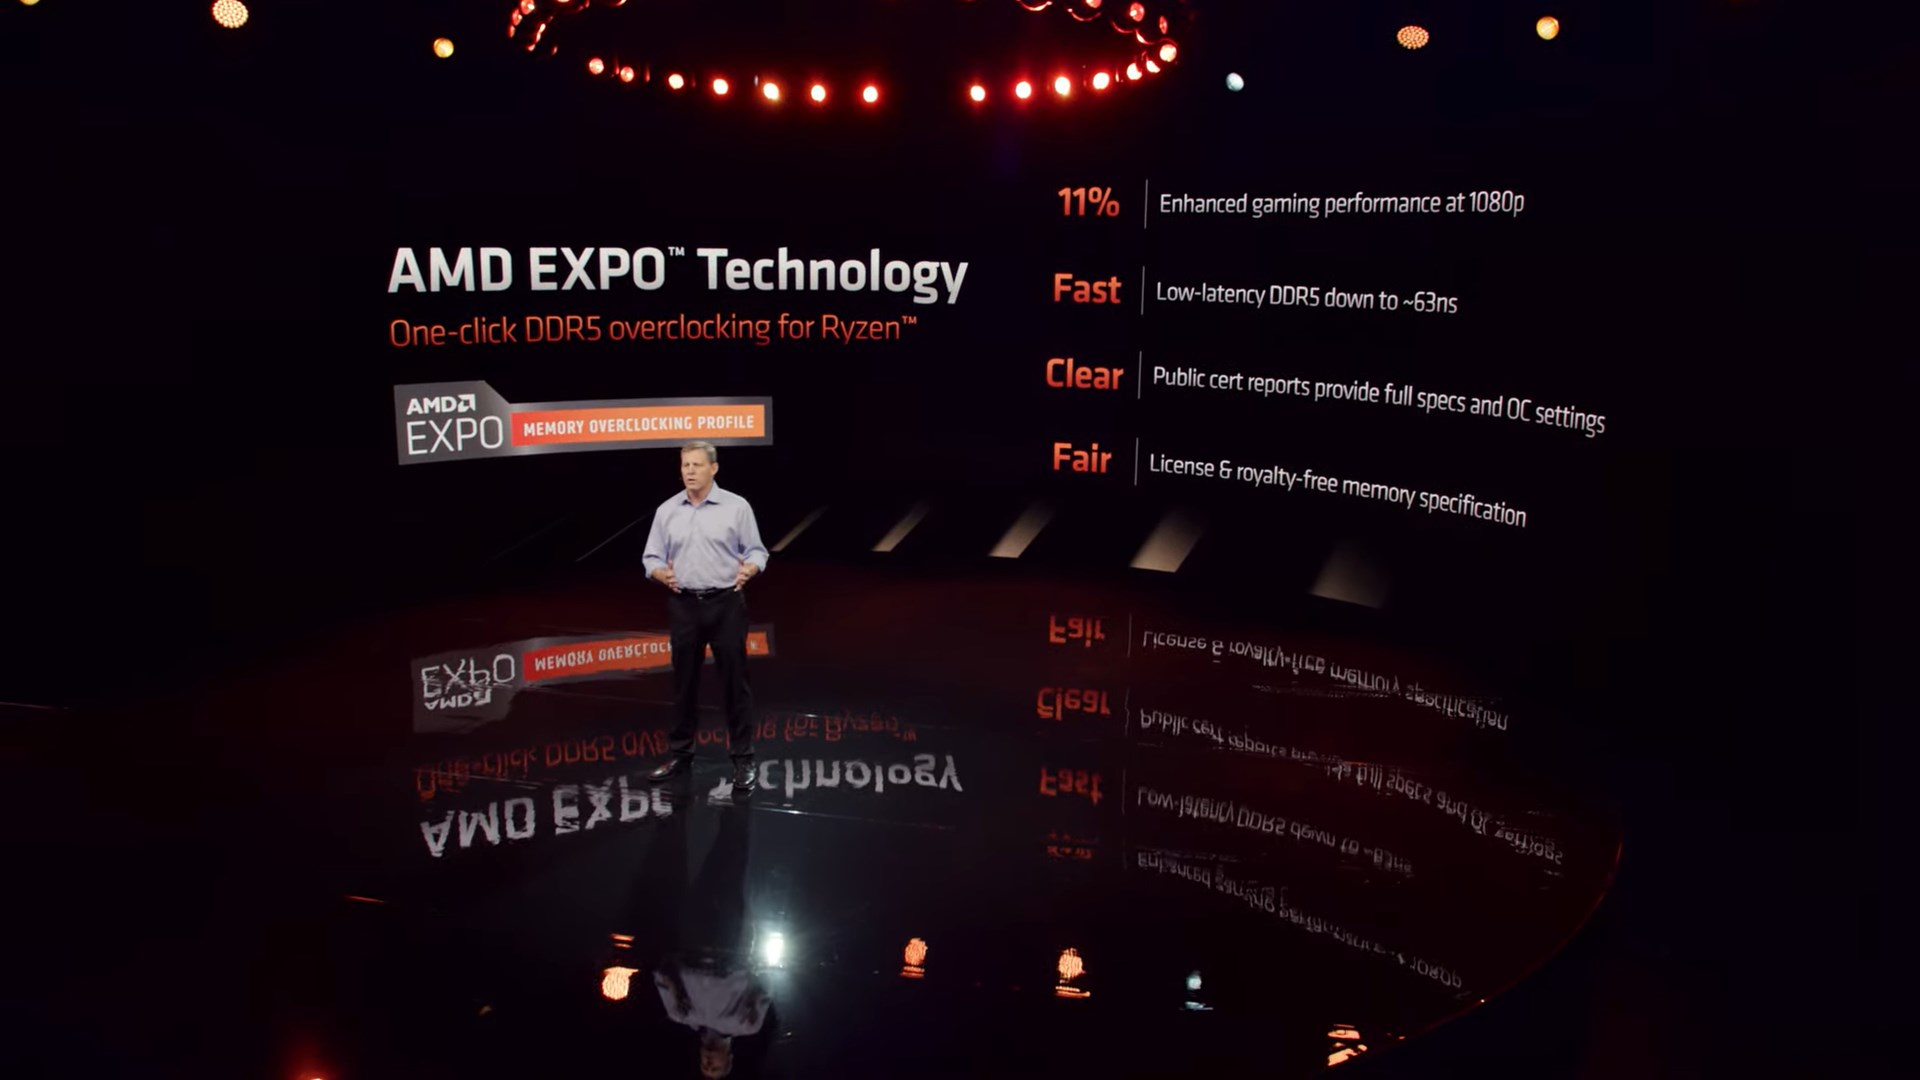 AMD EXPO DDR5